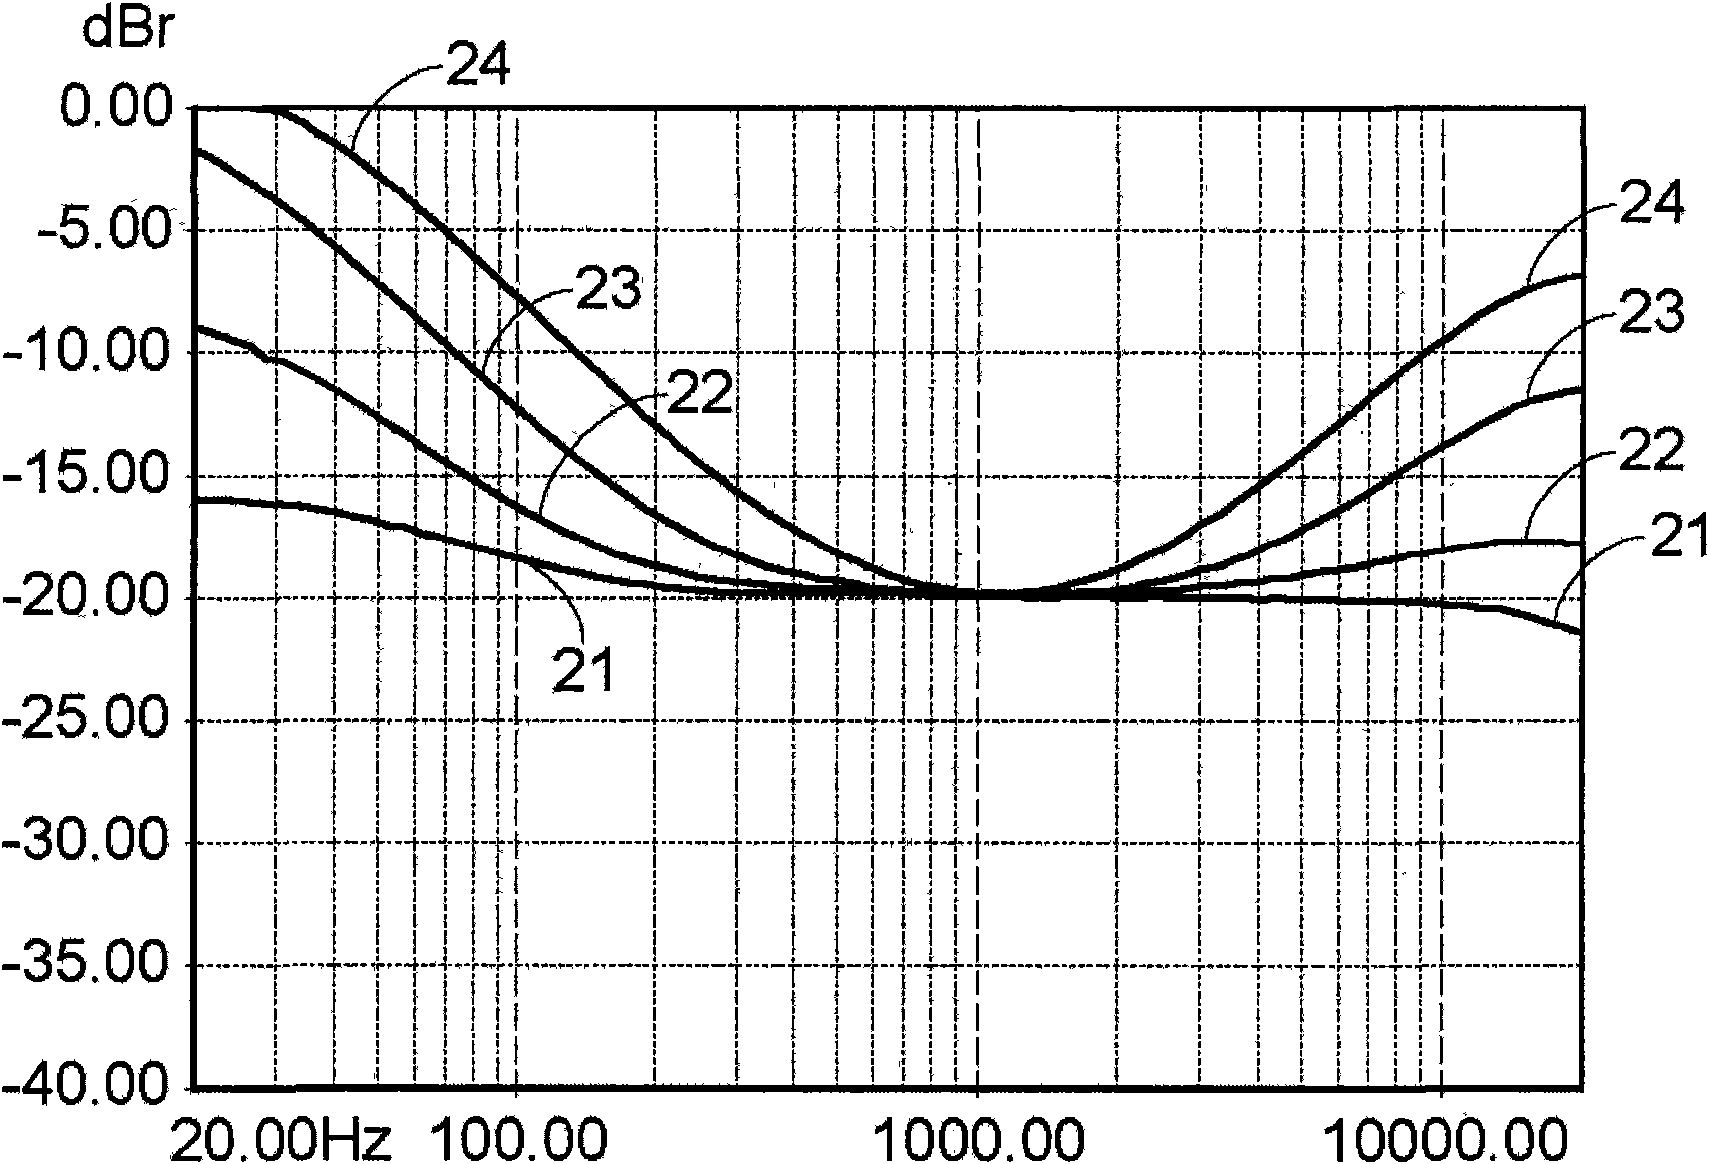 Volume control apparatus and method